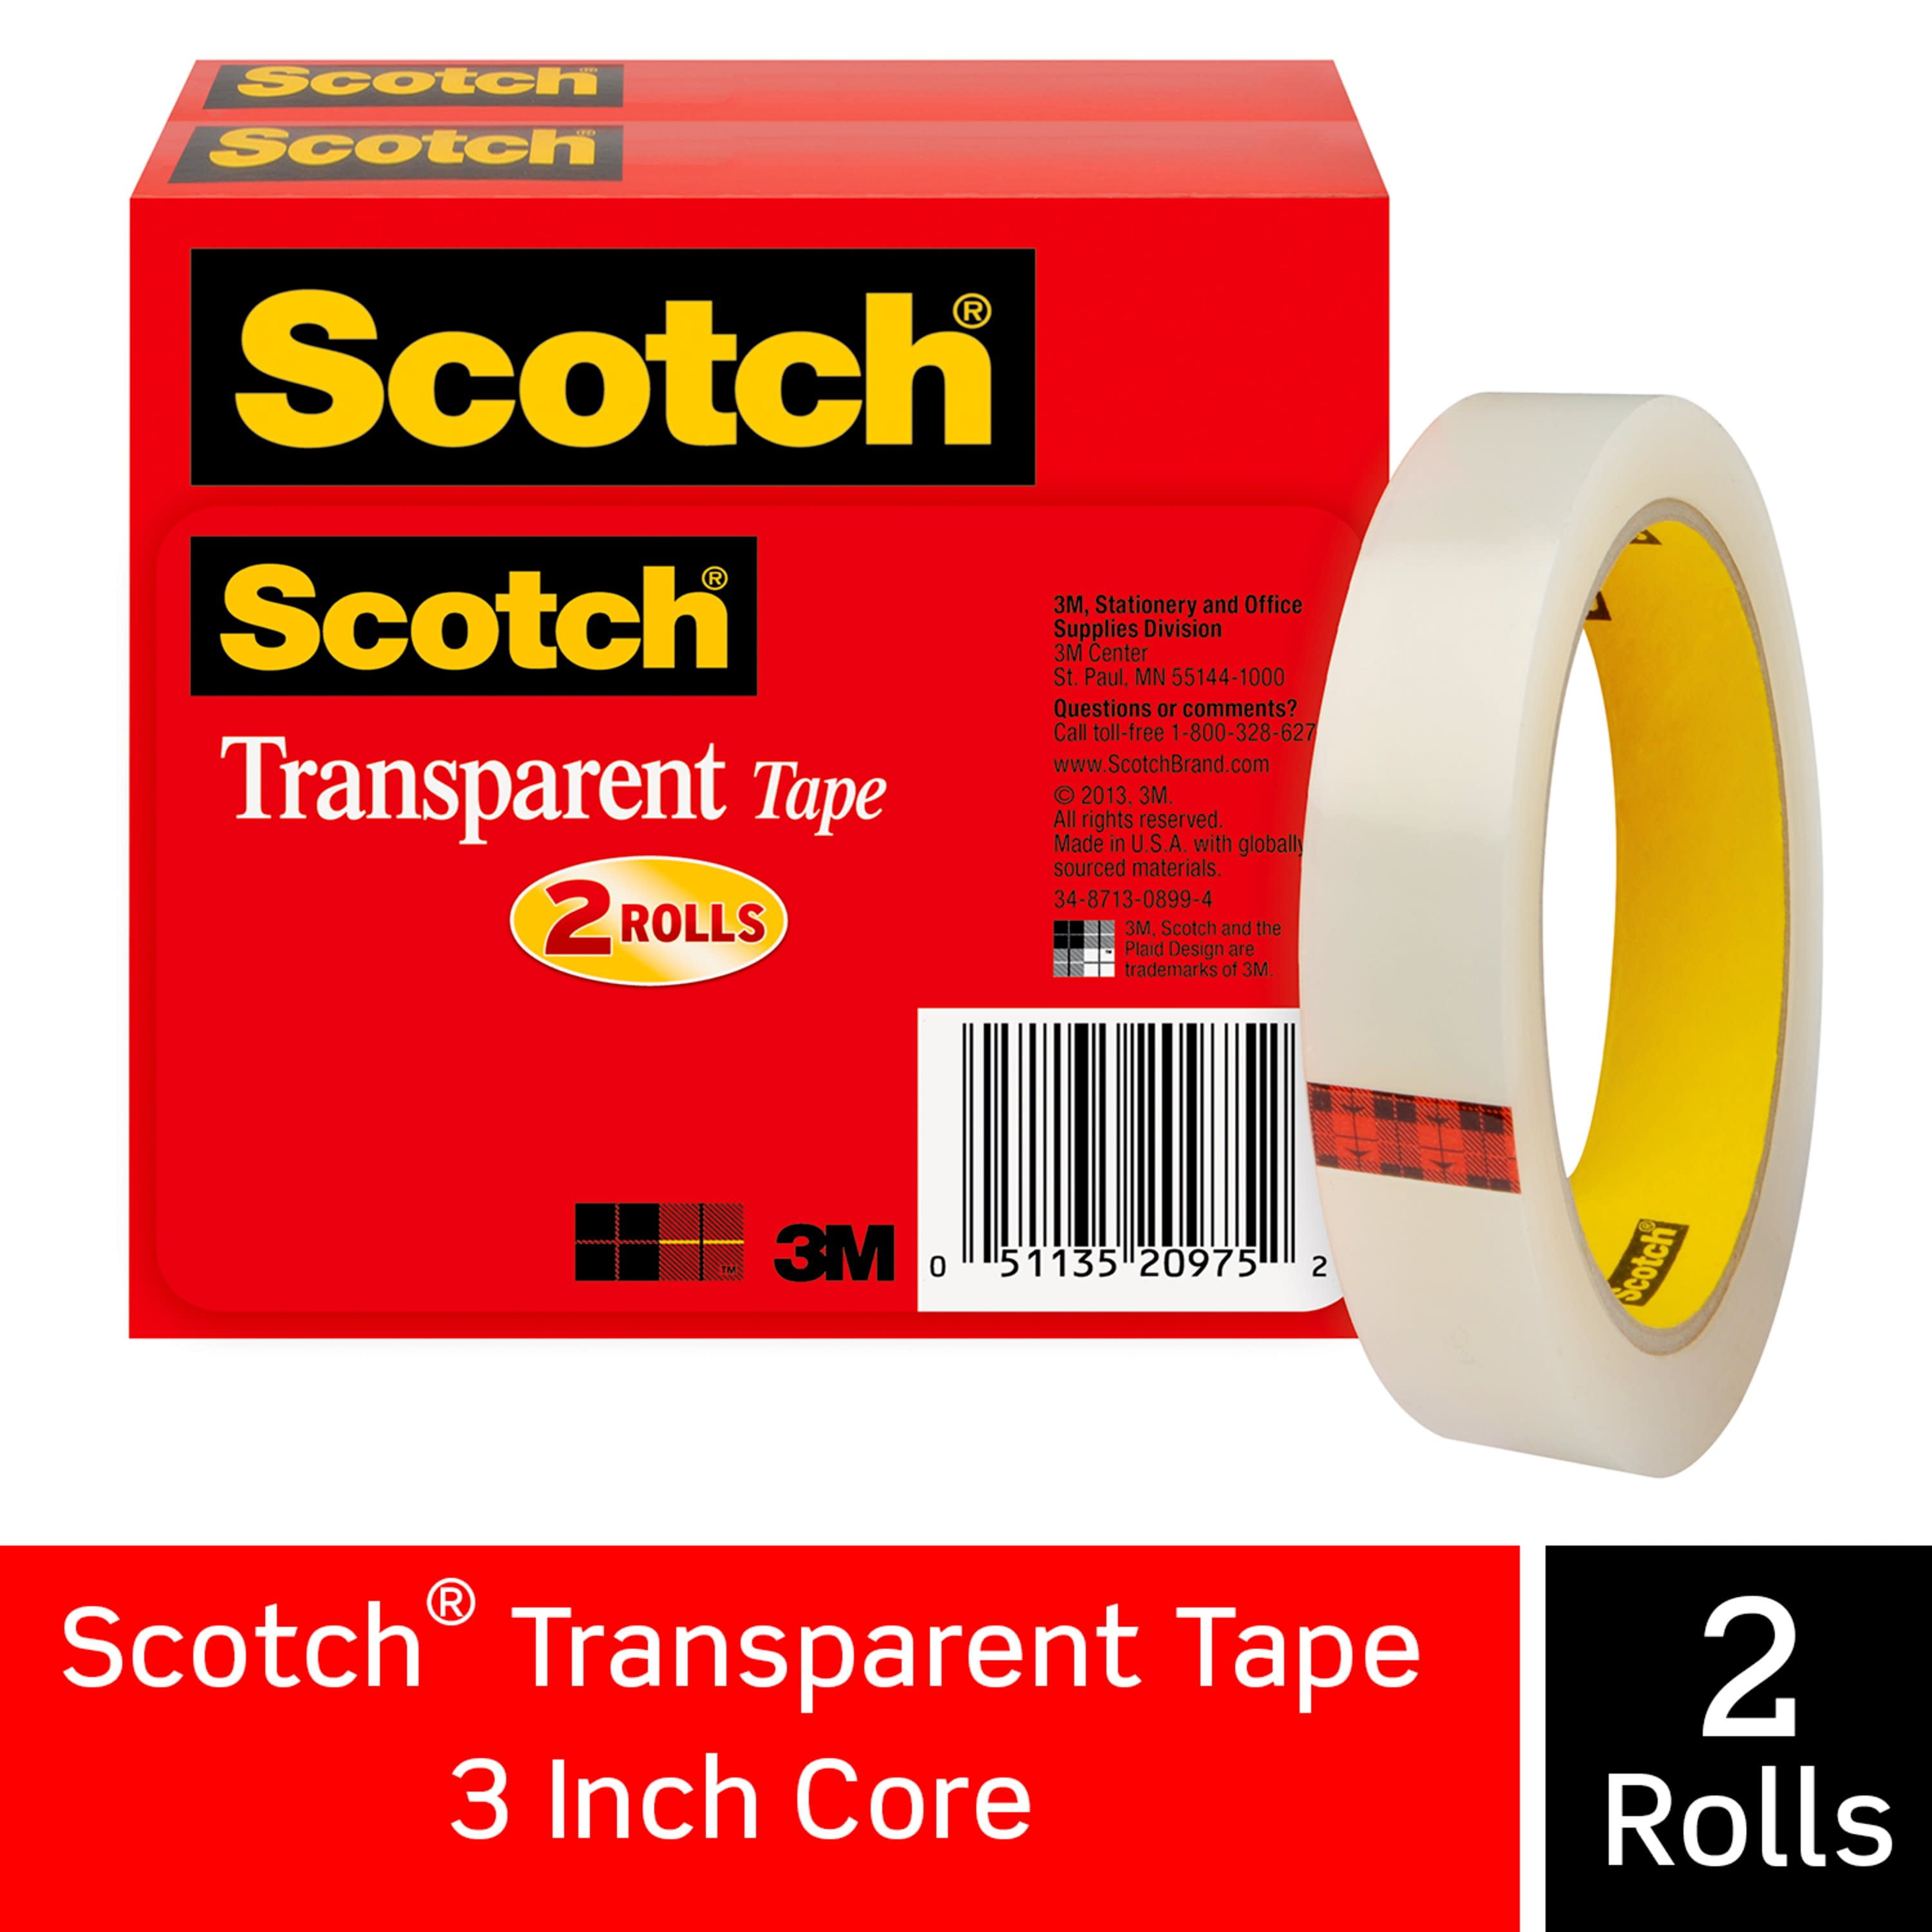 Scotch emballage transparent 48mmx40m - Talos